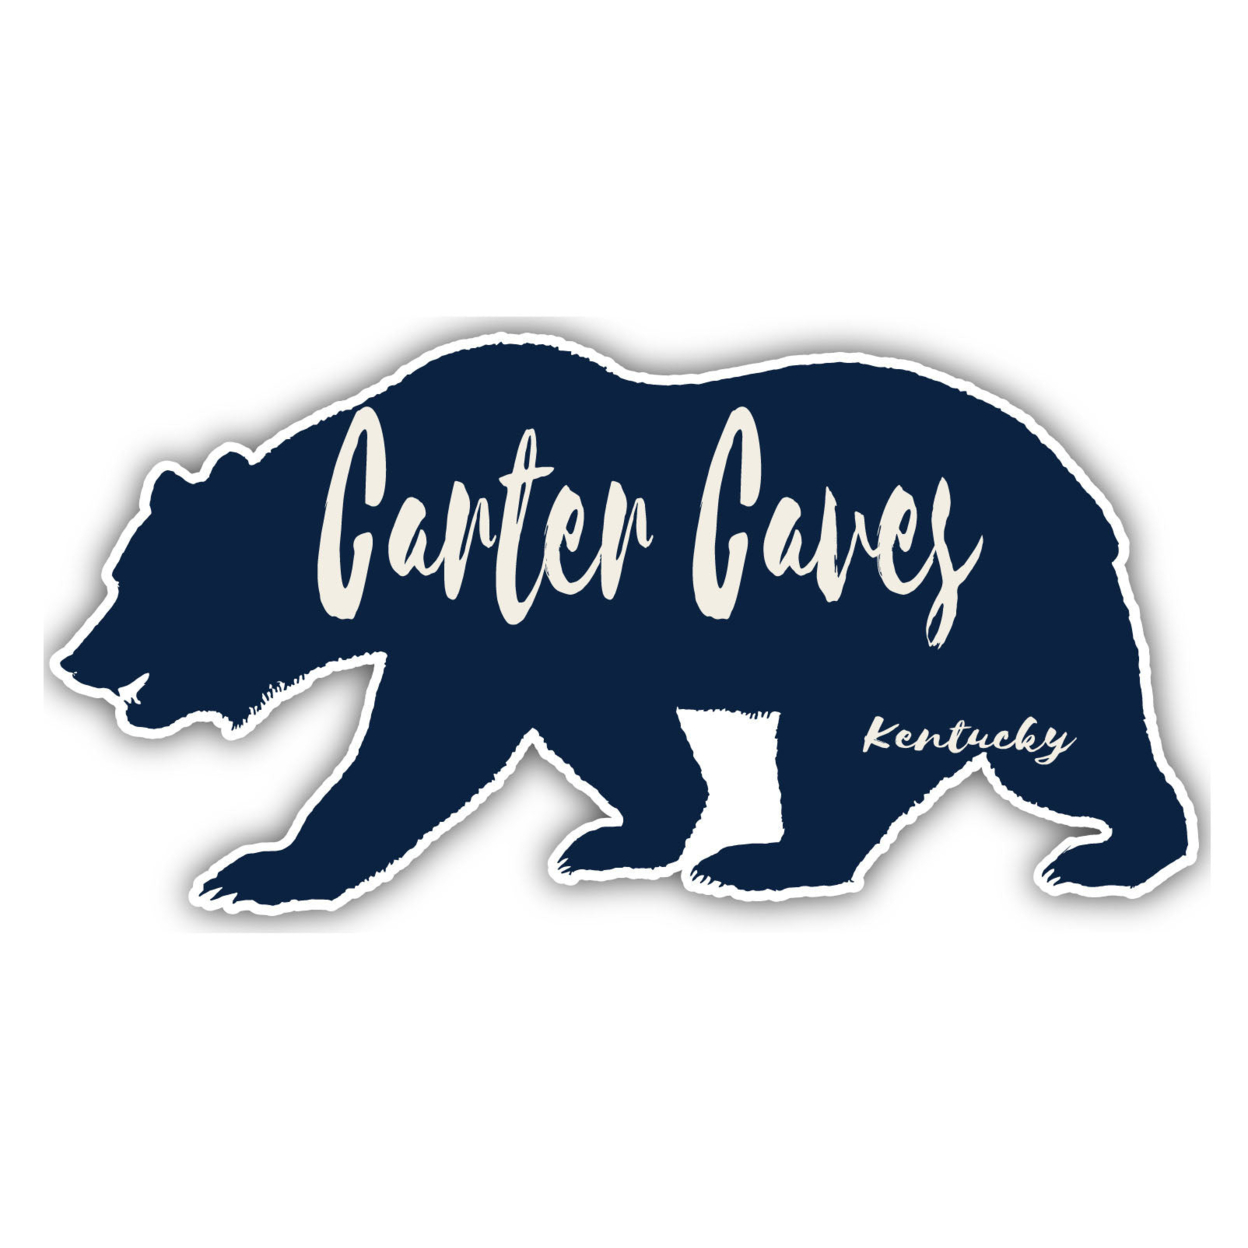 Carter Caves Kentucky Souvenir Decorative Stickers (Choose Theme And Size) - Single Unit, 6-Inch, Bear